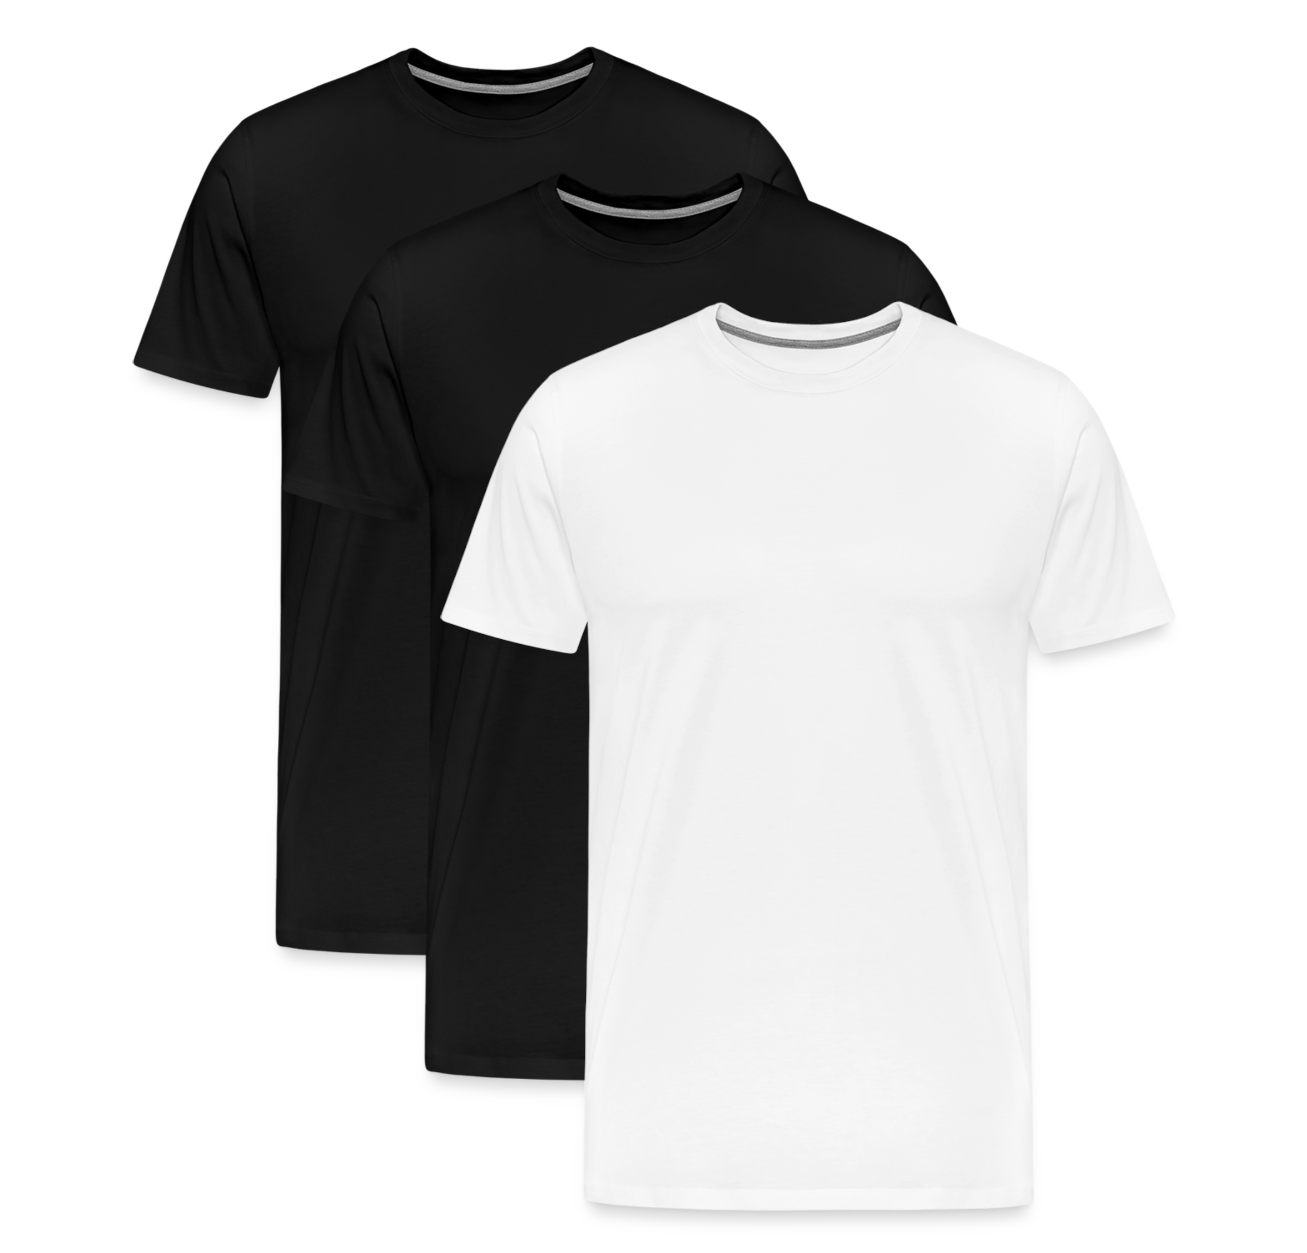 Fluent Tee Variety 3-Pack (Size 5XL) - Men's Premium T-Shirt from fluentclothing.com